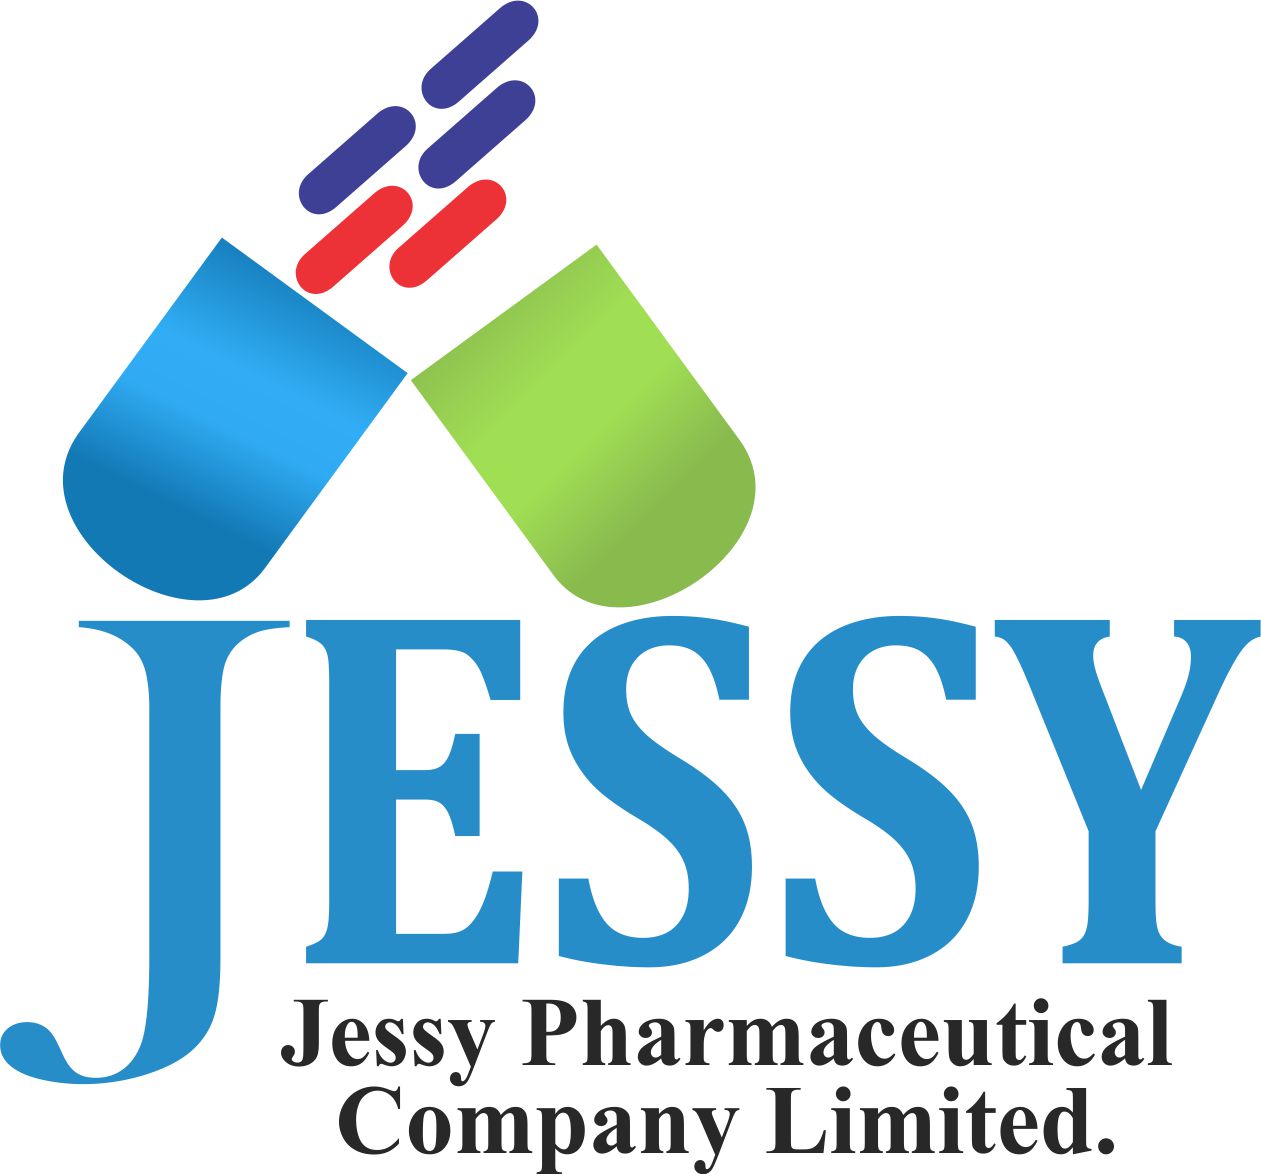 Jessy Pharmaceutical Company Limited 